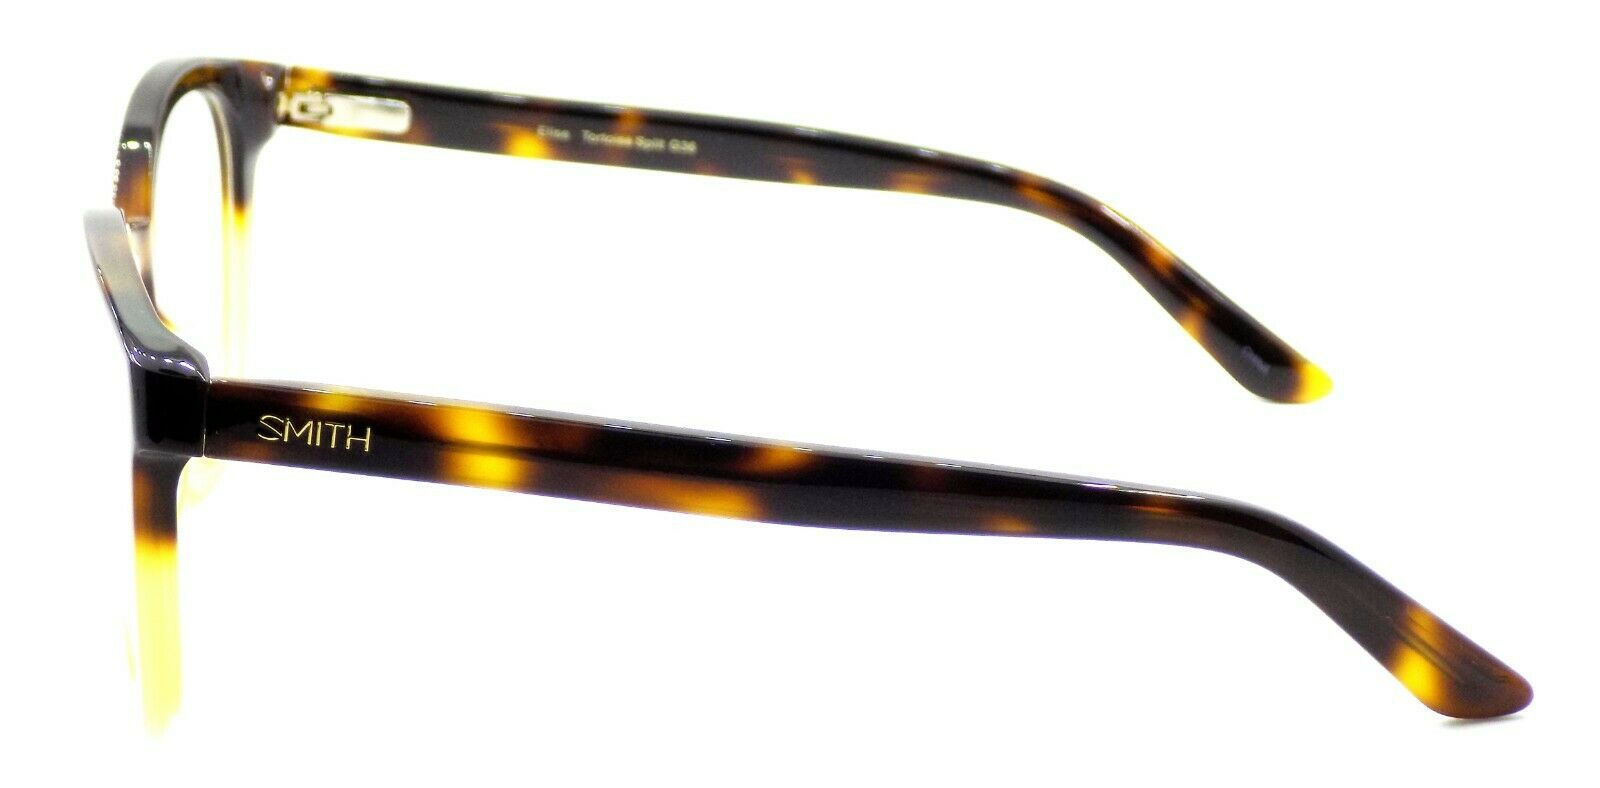 3-SMITH Optics Elise G36 Women's Eyeglasses Frames 51-20-135 Tortoise Split + CASE-762753569943-IKSpecs